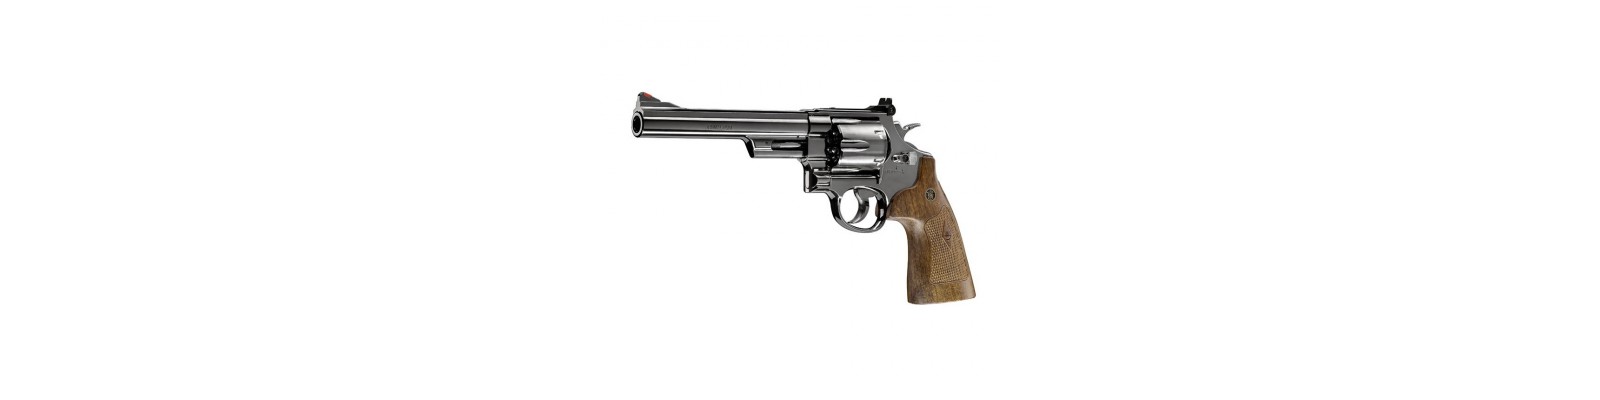 Holster pistolet et revolver - Accessoires - Armurerie Centrale